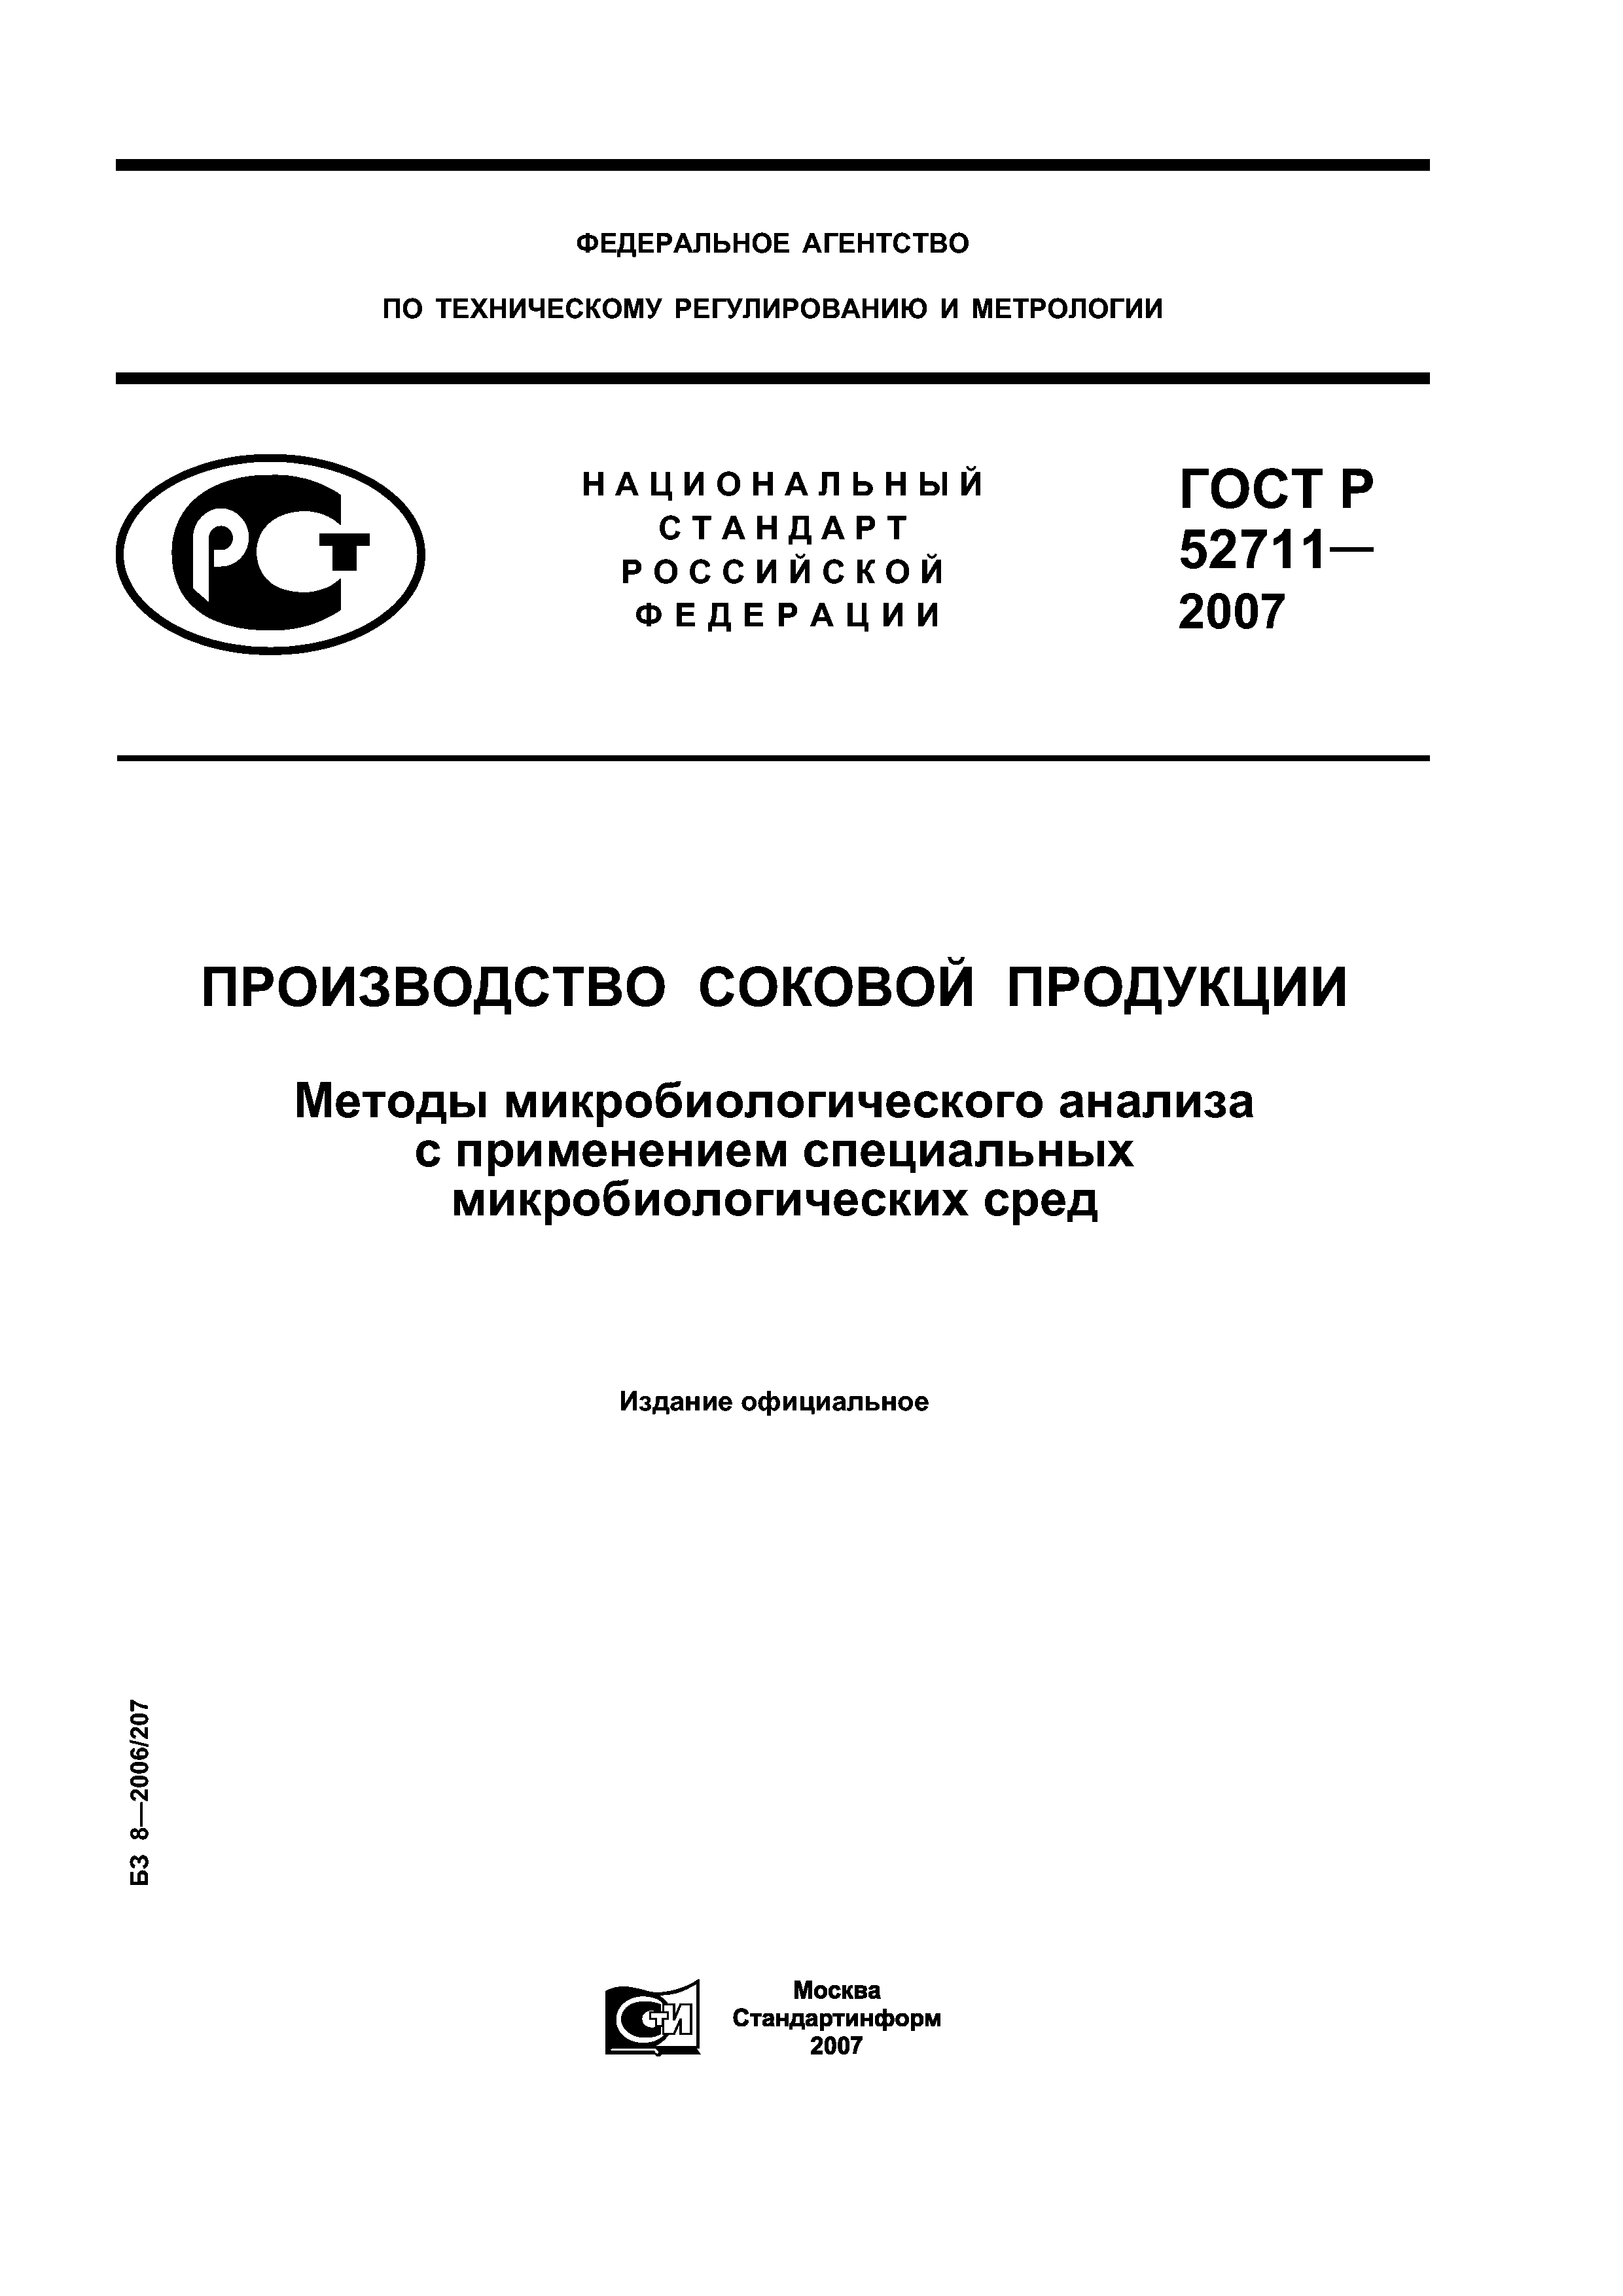 ГОСТ Р 52711-2007